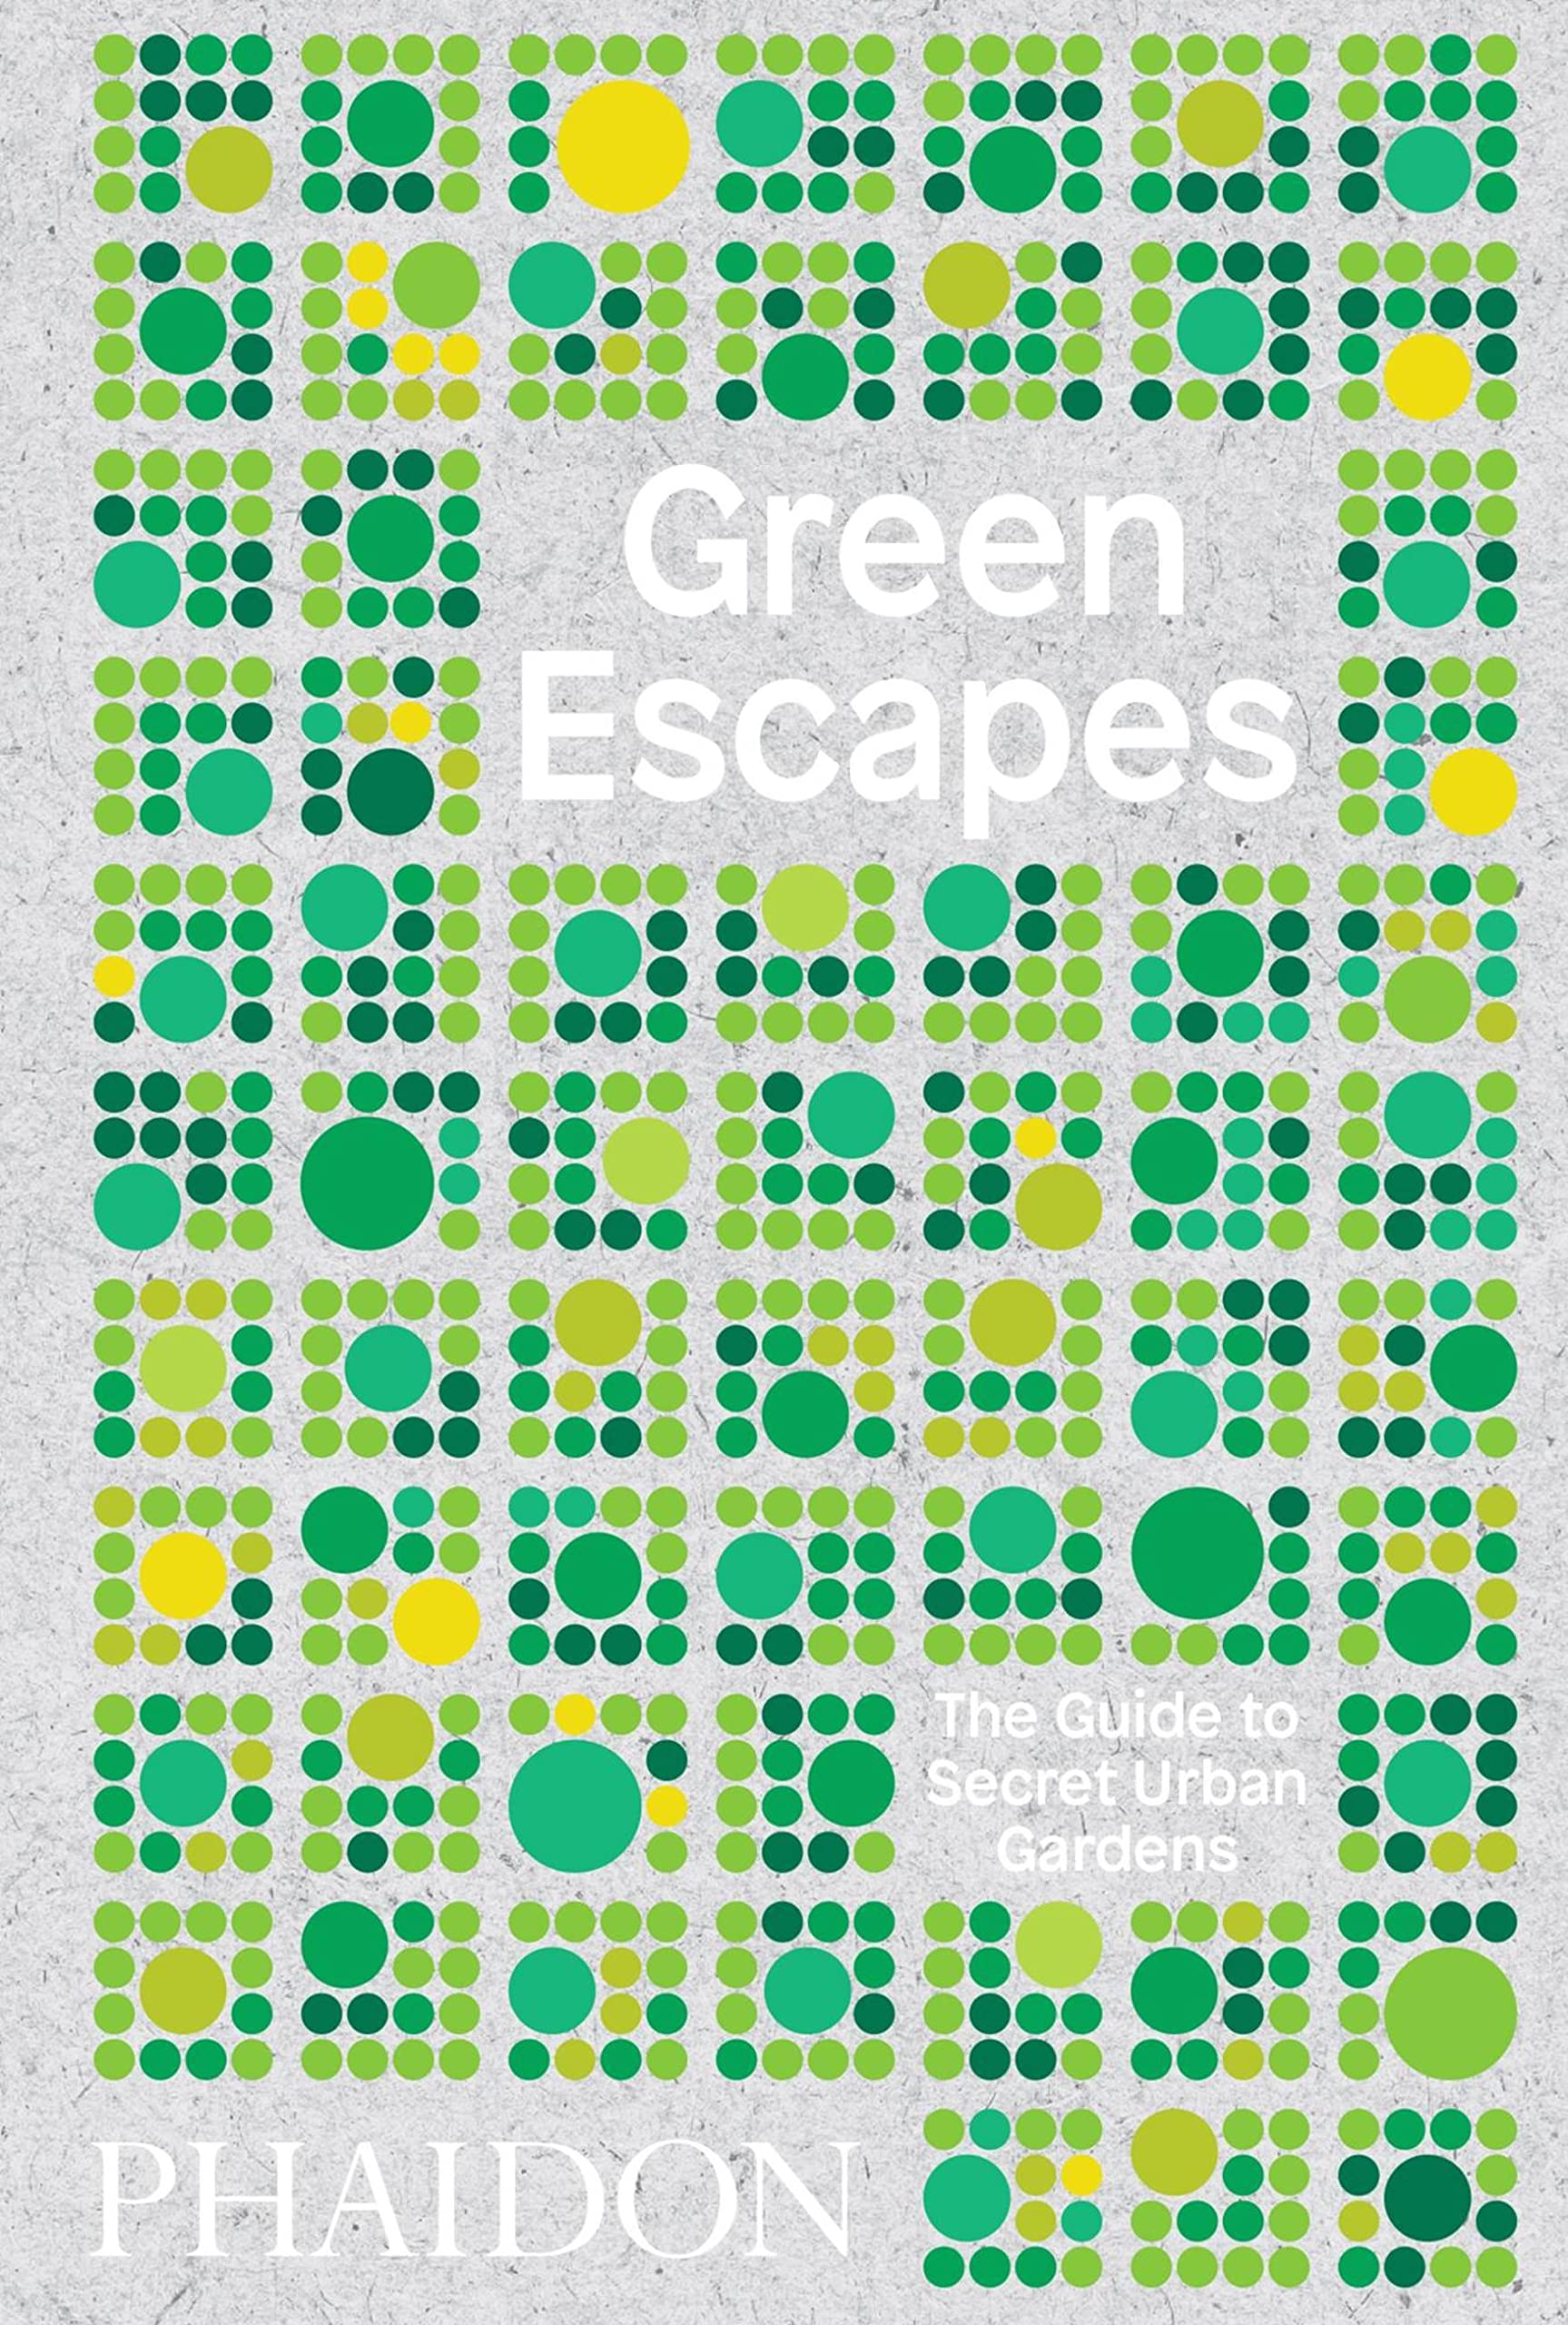 Green Escapes : The Guide to Secret Urban Gardens (Hardcover)